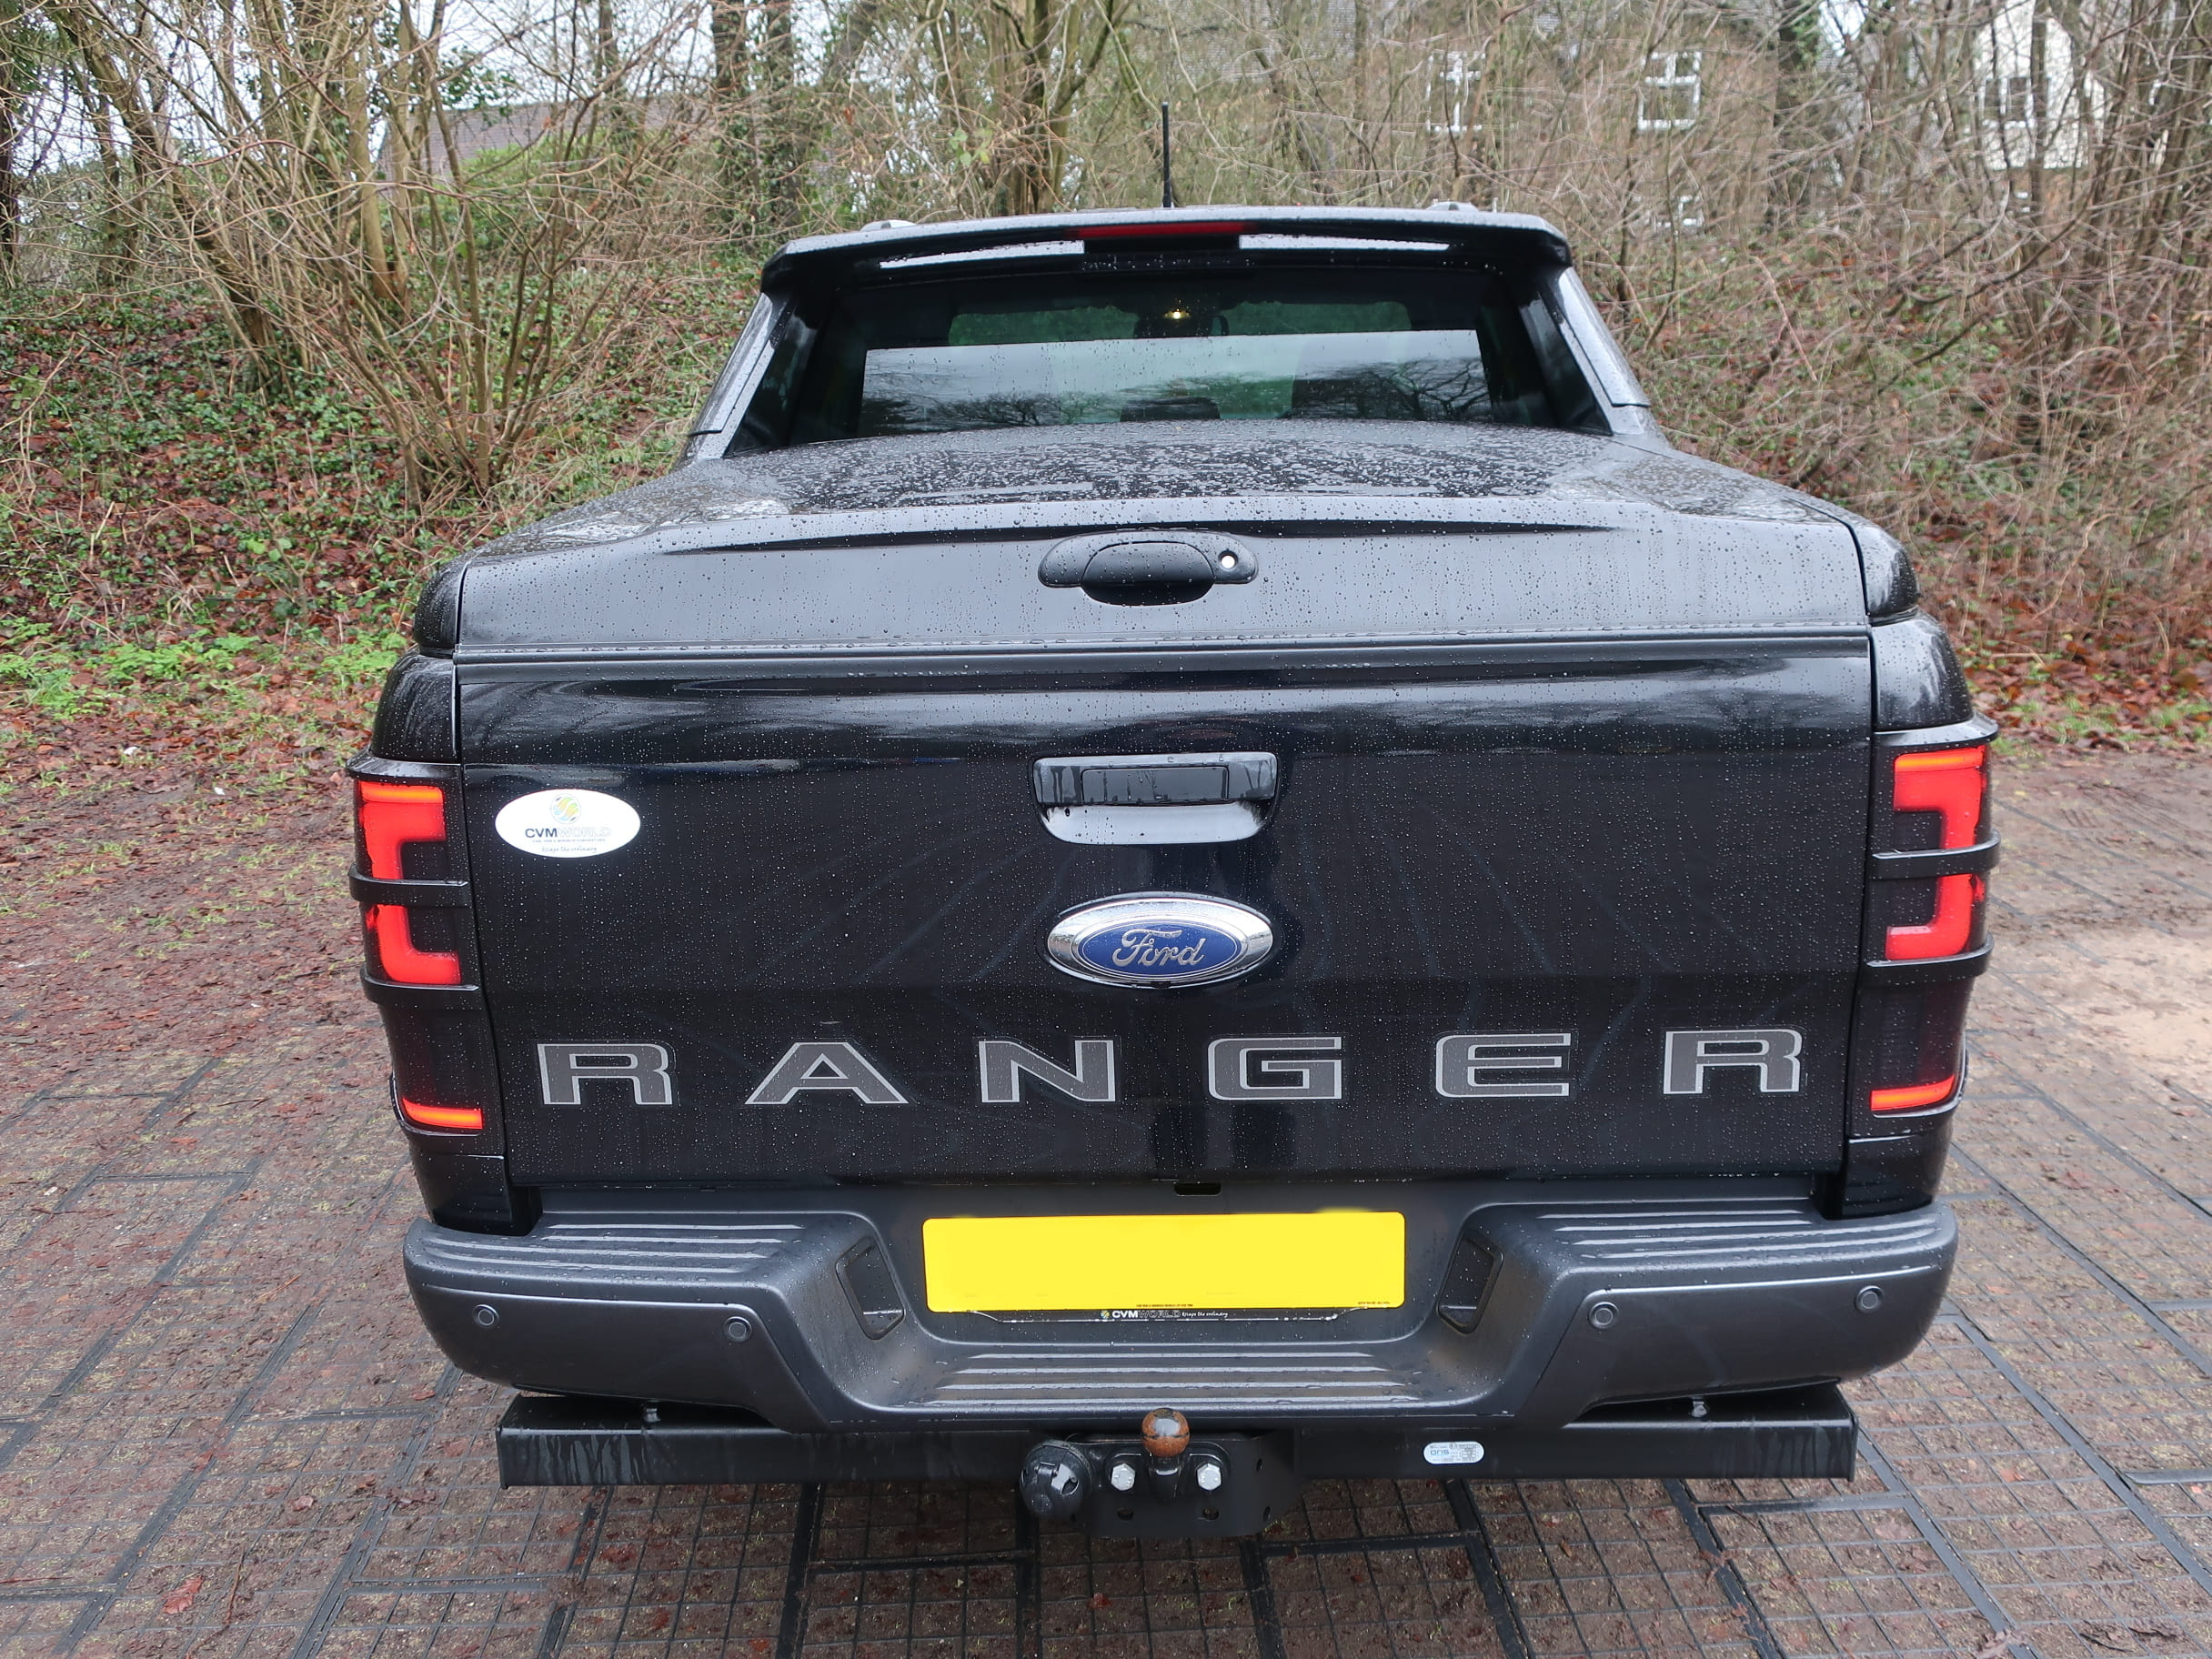 Ex-Demo-Ford-Ranger-Extreme-Upgraded-Spec-External-Rear